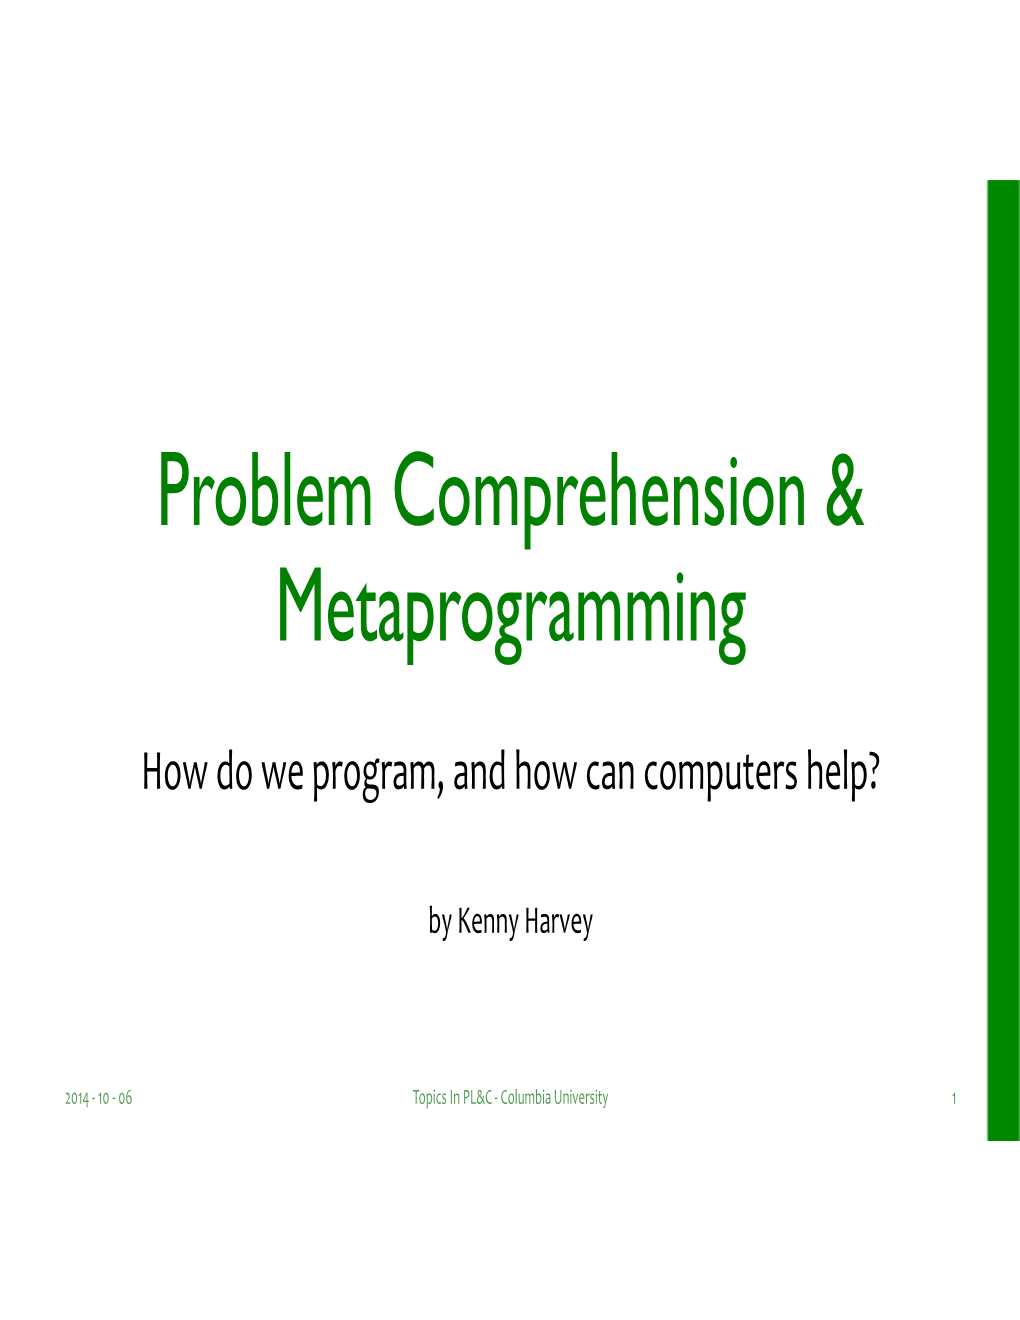 Problem Comprehension & Metaprogramming